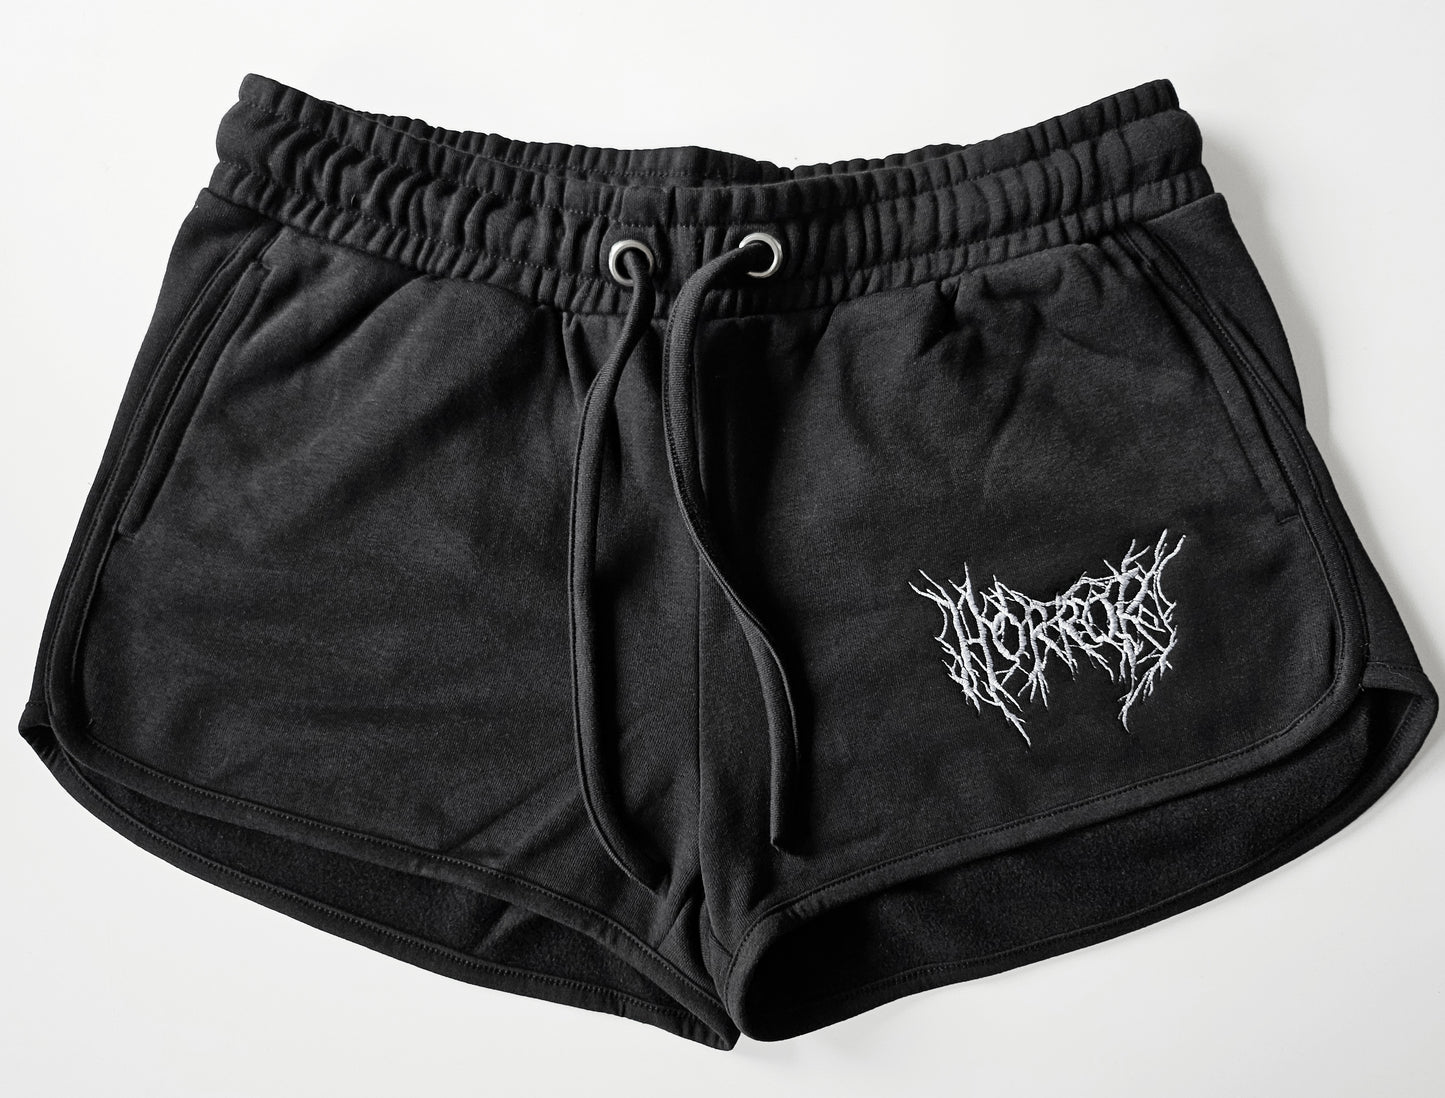 Metal 'Horror' Shorts